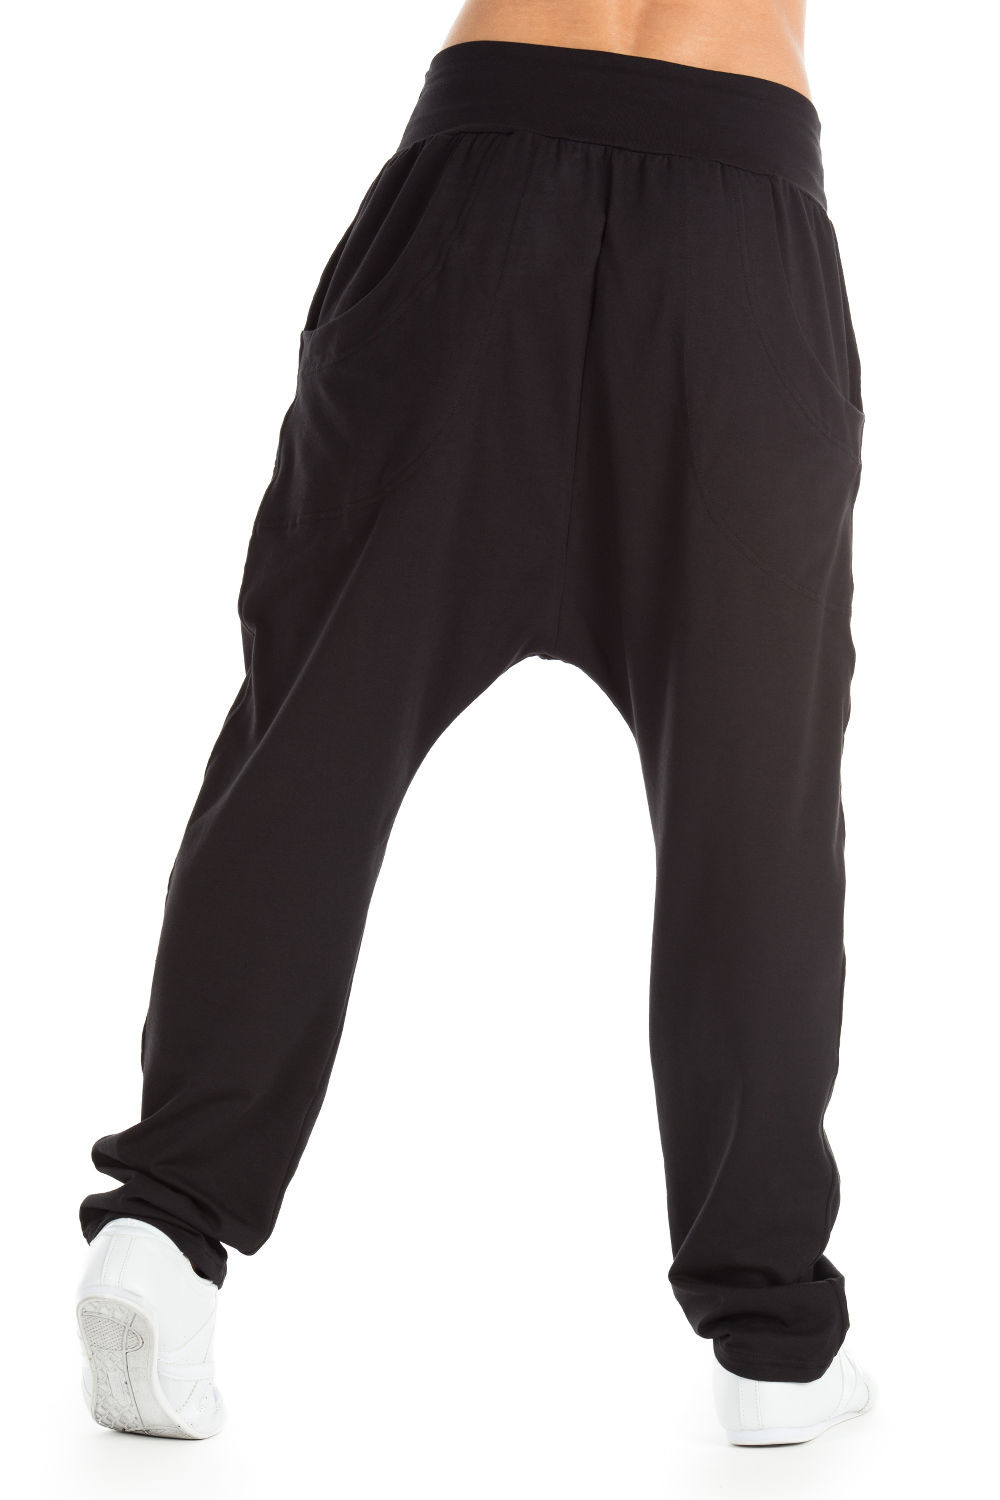 UNISEX 4Pocket Pants WH13, schwarz, Winshape Dance Style